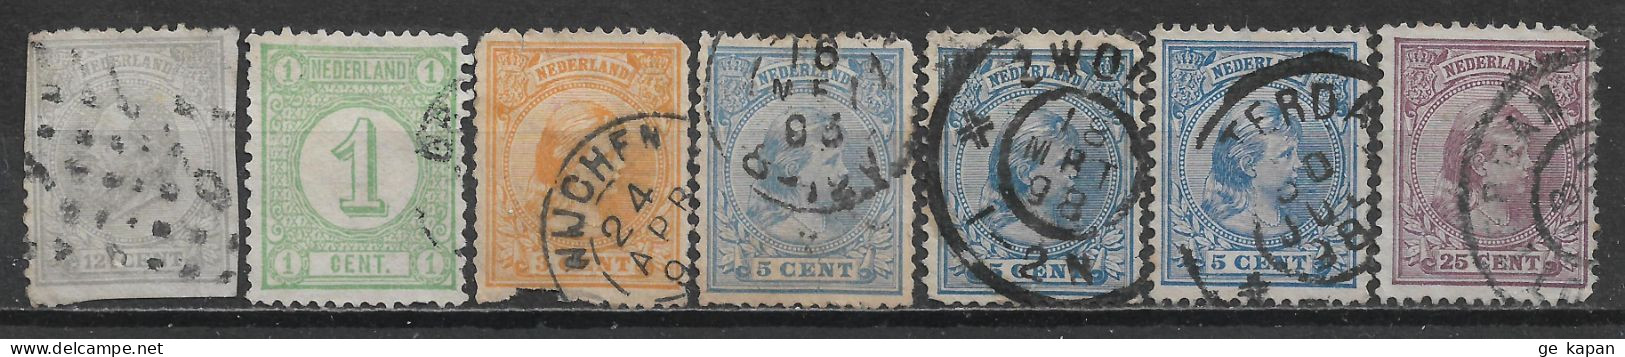 1875-1894 NETHERLANDS Set Of 7 Used Stamps (Michel # 22D,31aD,34a,35ab,35b,42b) CV €11.10 - Gebruikt